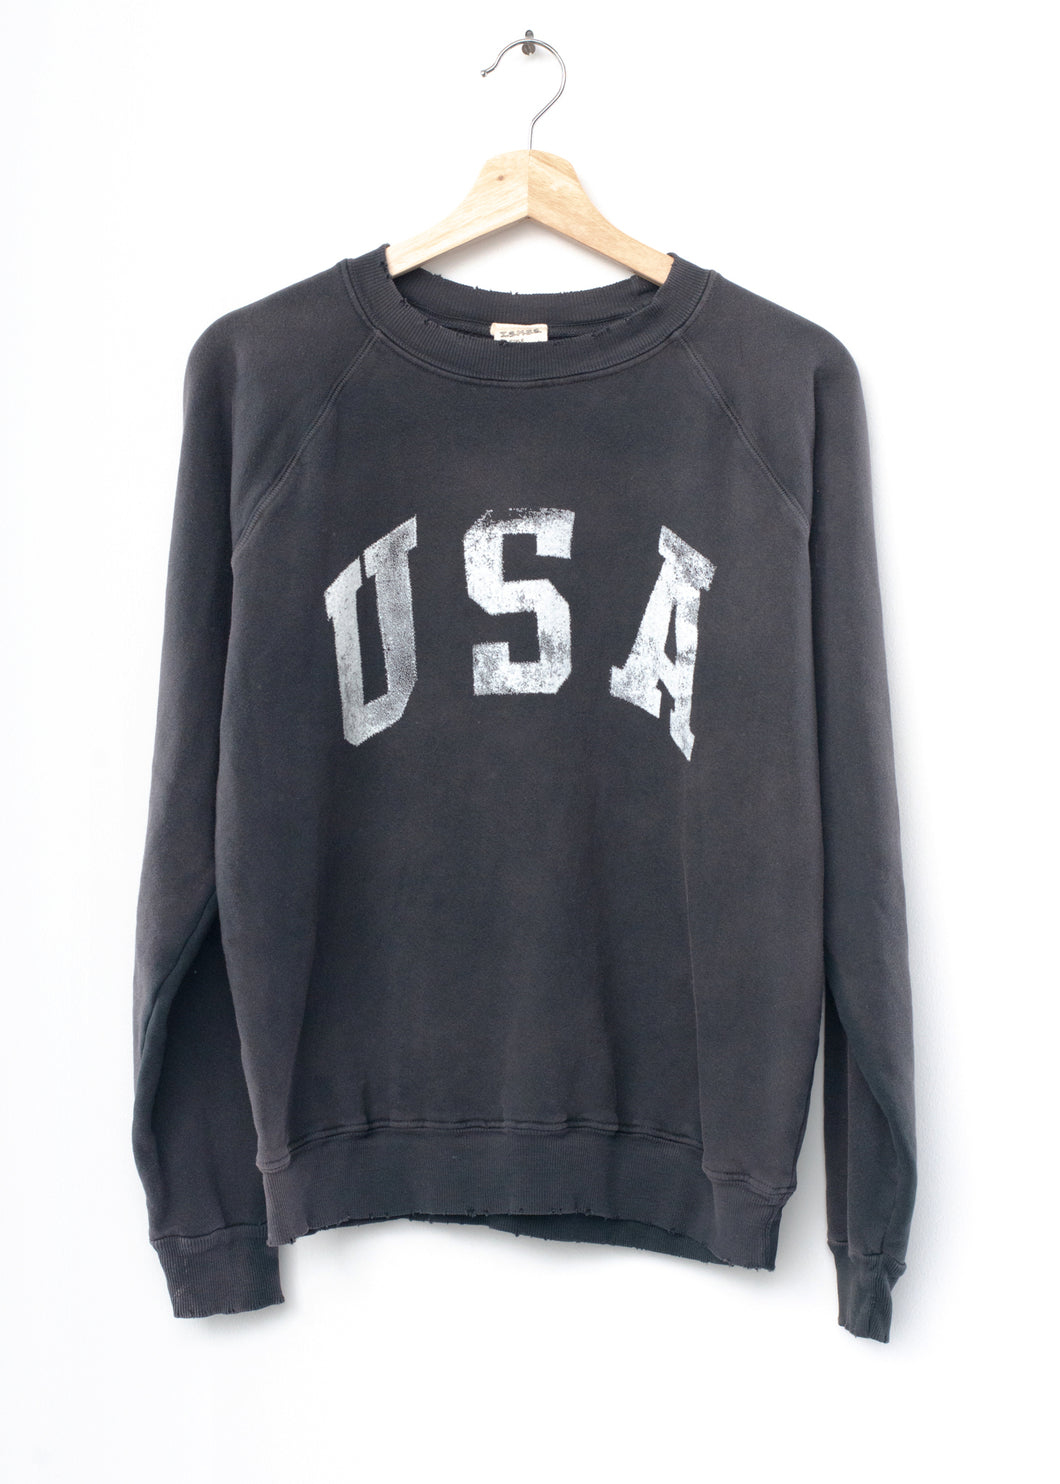 USA Sweatshirt(2 Colors)